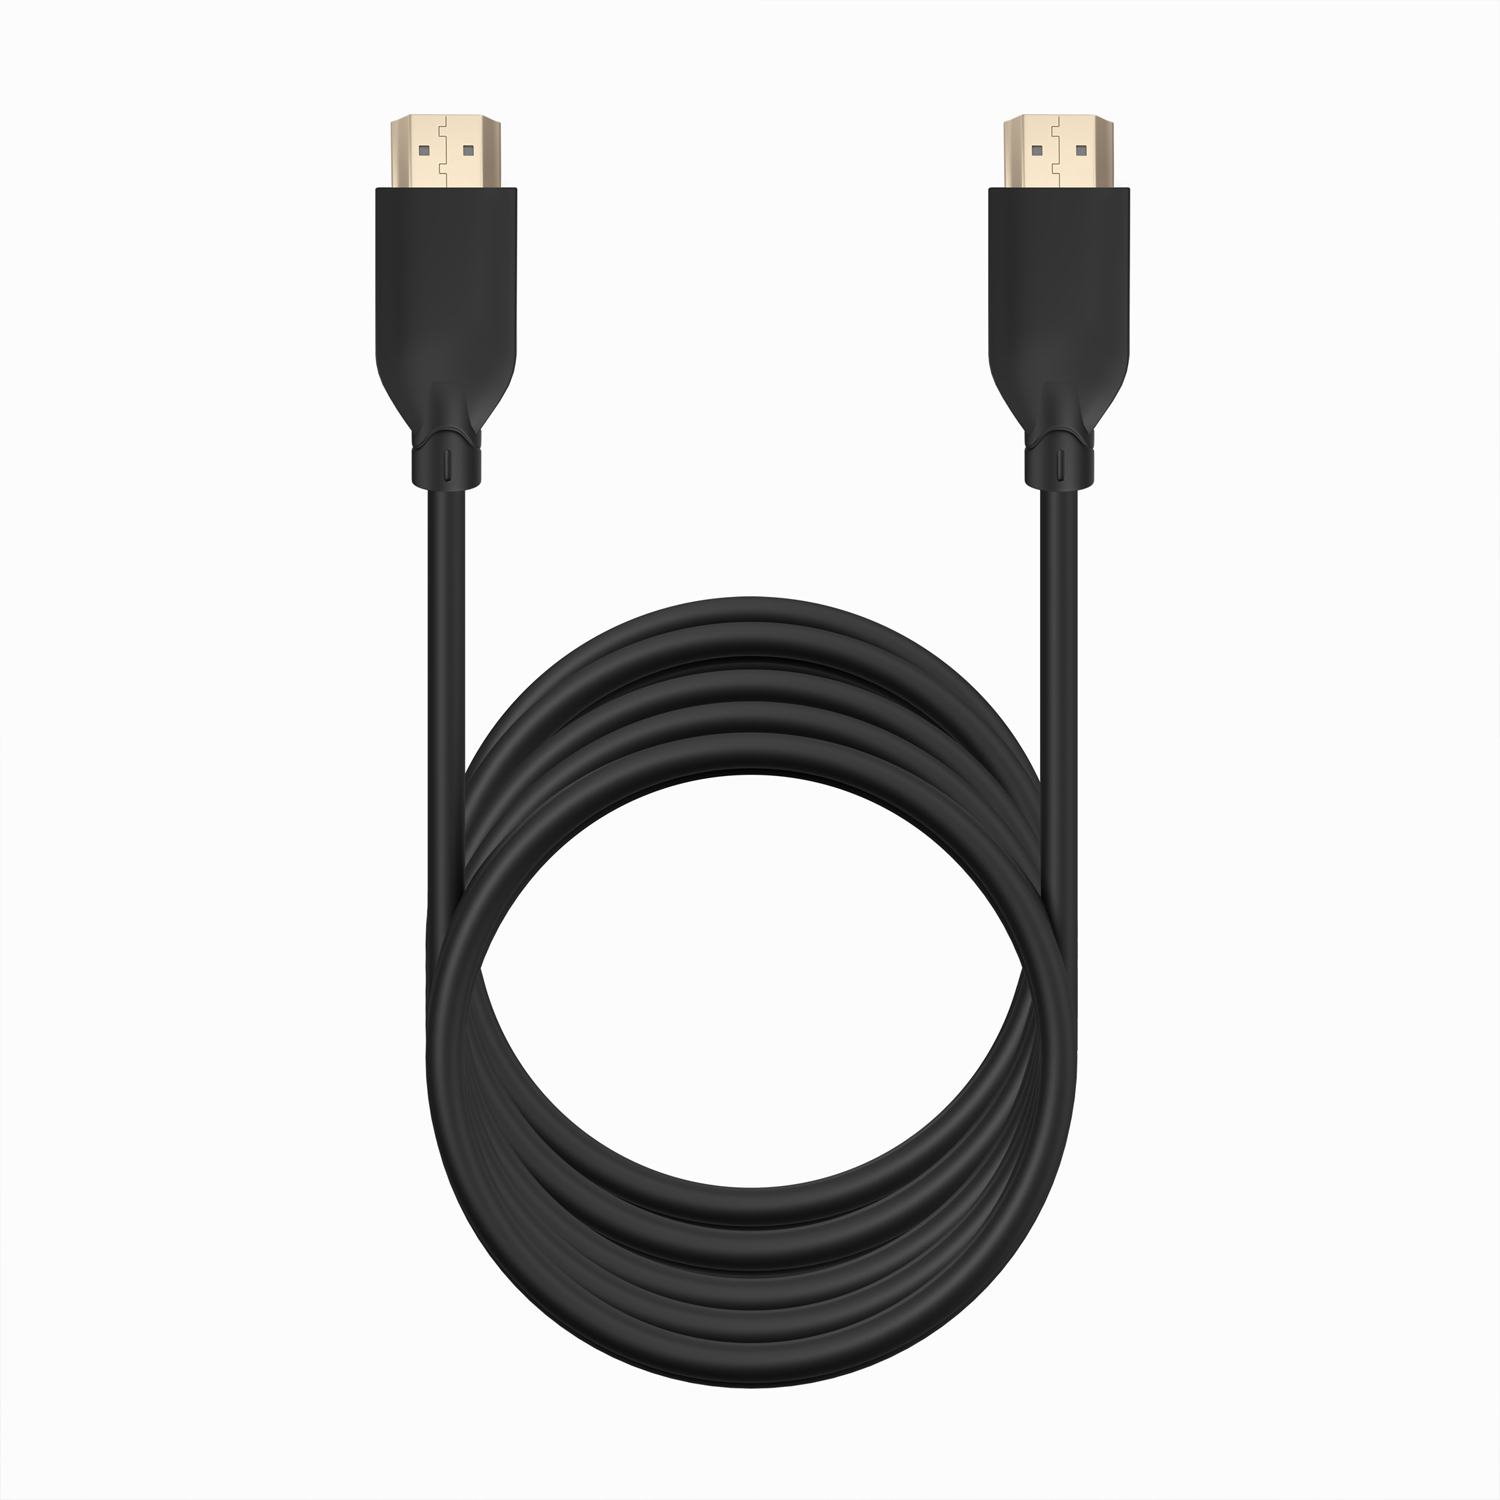 Cable extensiòn HDMI (macho - hembra) , v2.0, 2 mts, color negro, 4k@60hz /  / mod. Y- C165K 